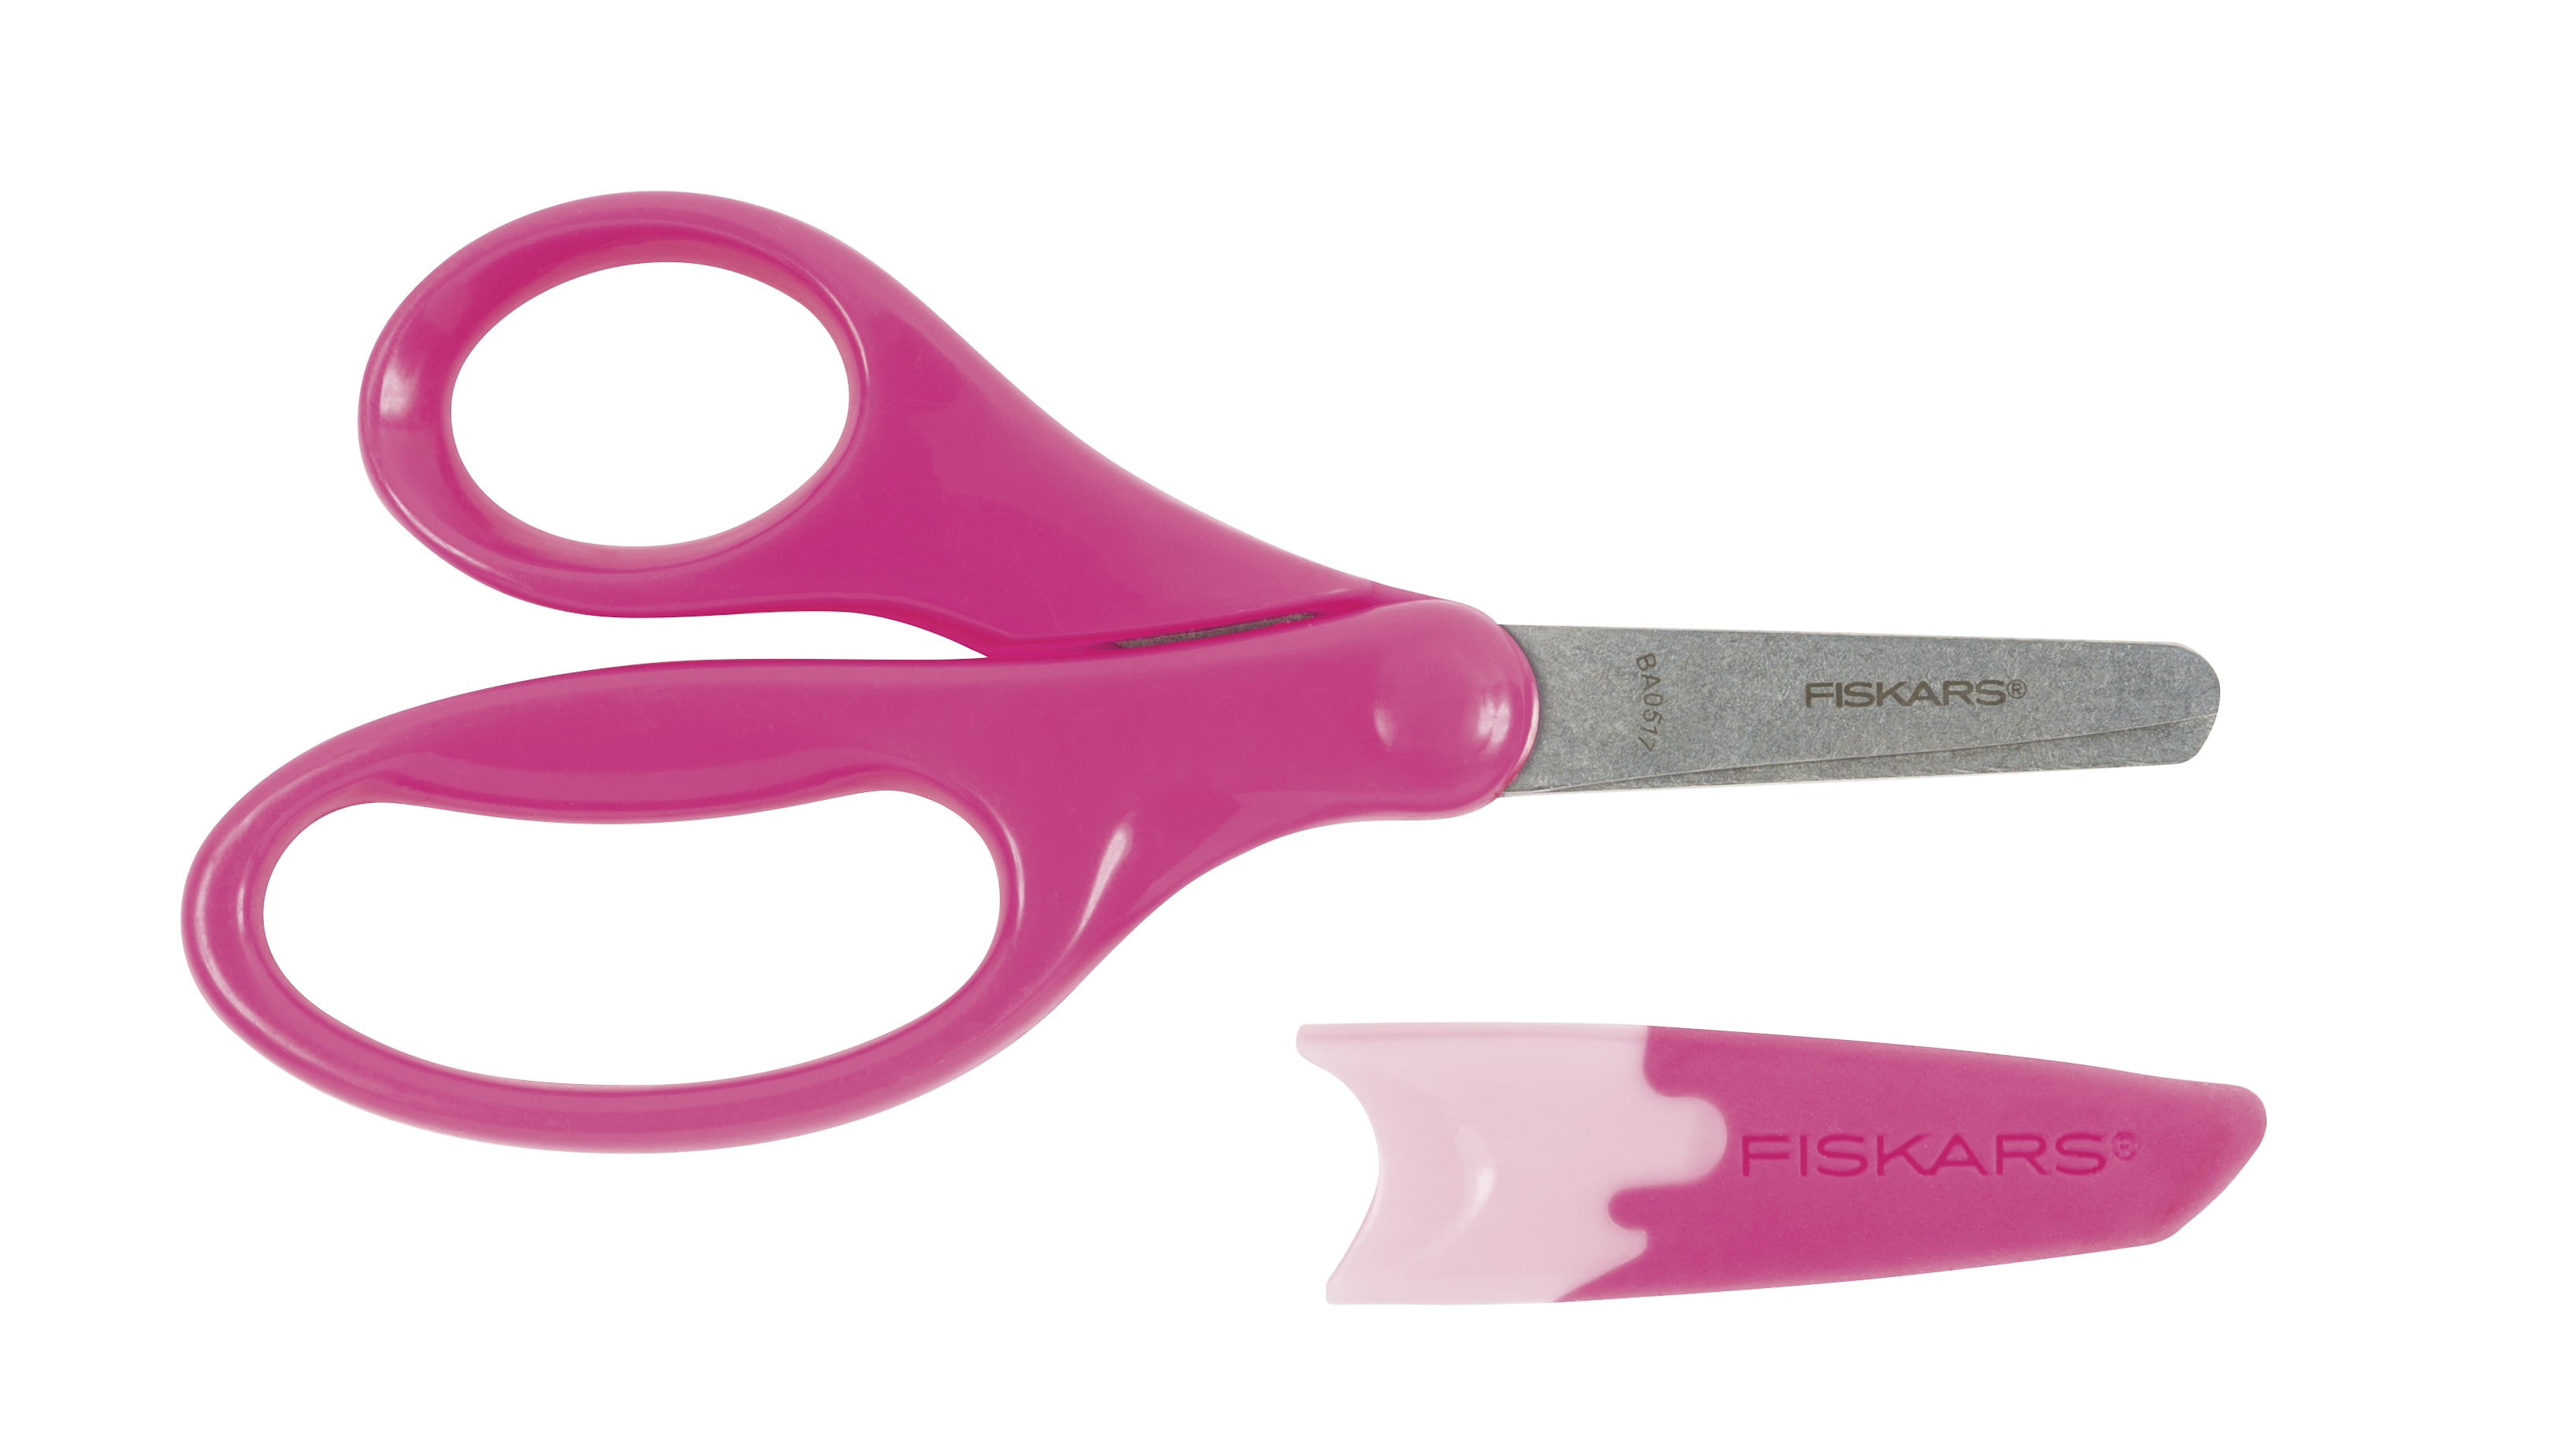 Fiskars Blunt-tip Kids Scissors (5 in.) - Pink - Walmart.com - Walmart.com